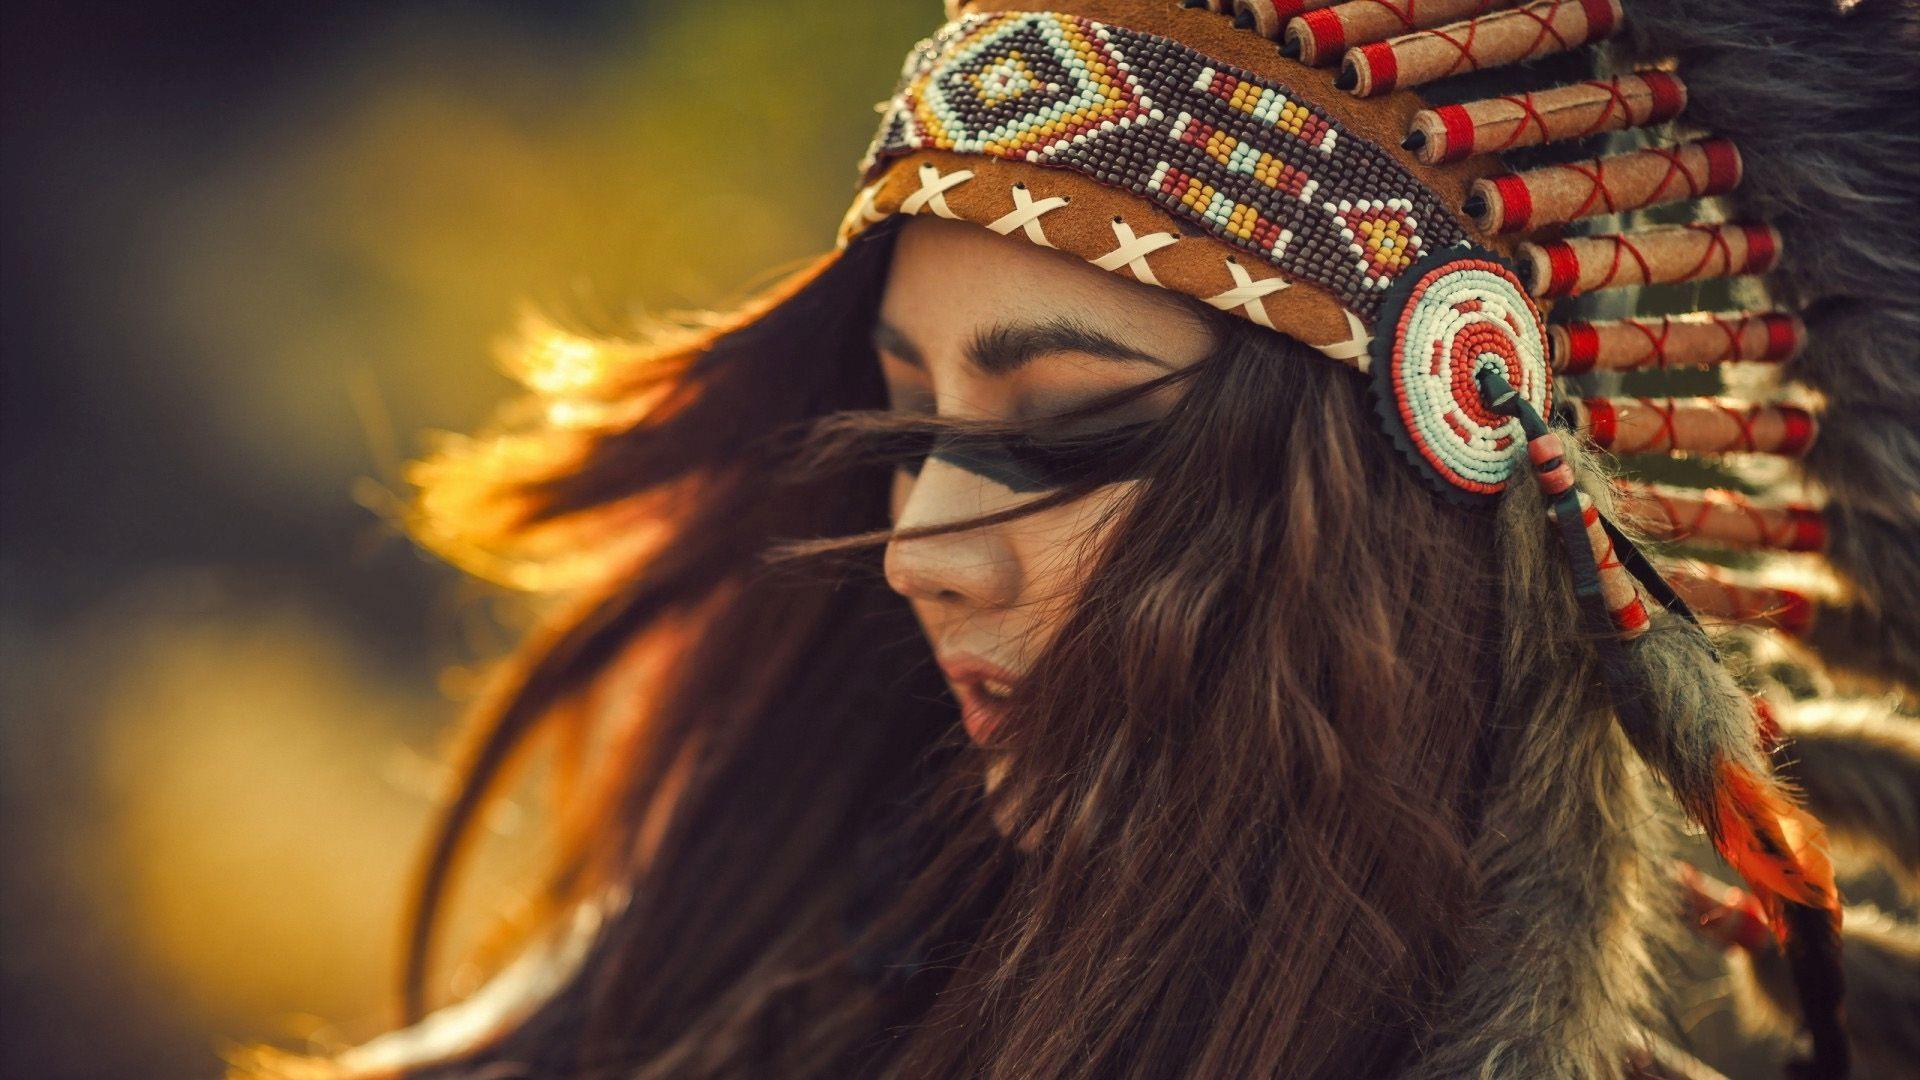 Native American Girl Wallpaper Image